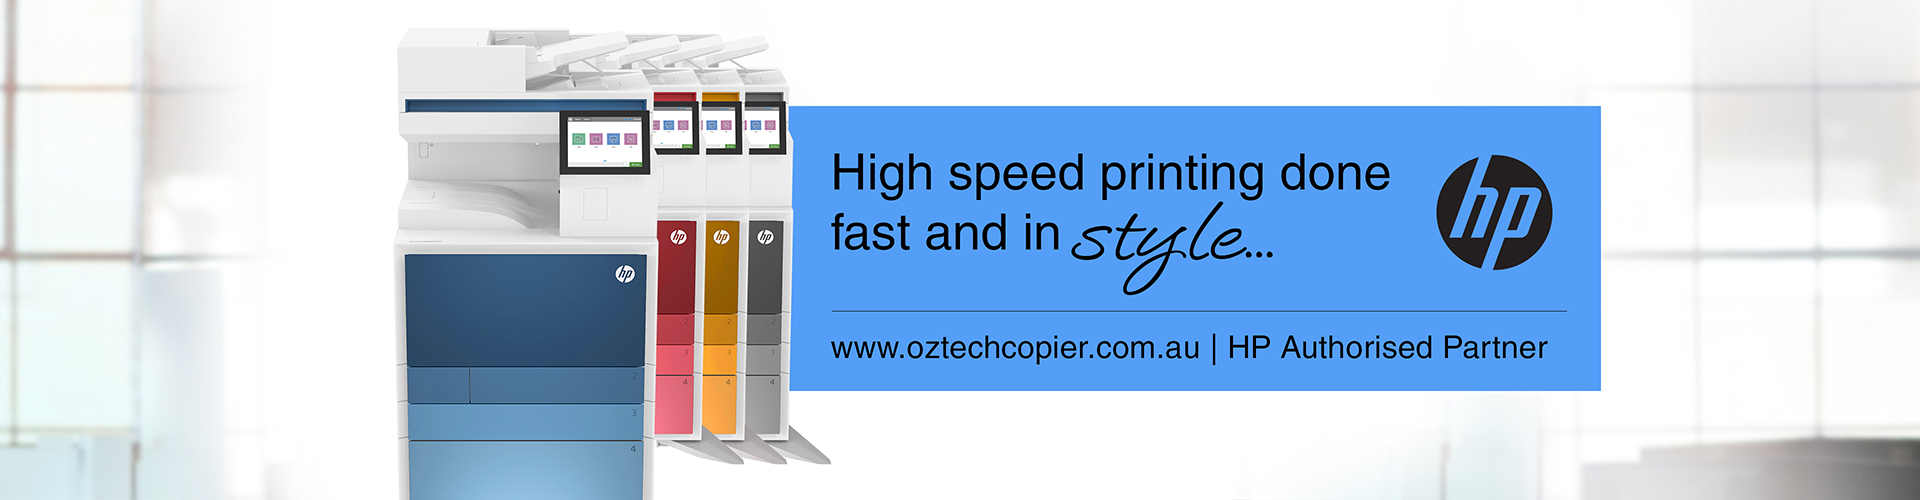 HP Color LaserJet Managed MFP E877dn A3 MFP Printer | Oztech Business Equipment - www.oztechcopier.com.au